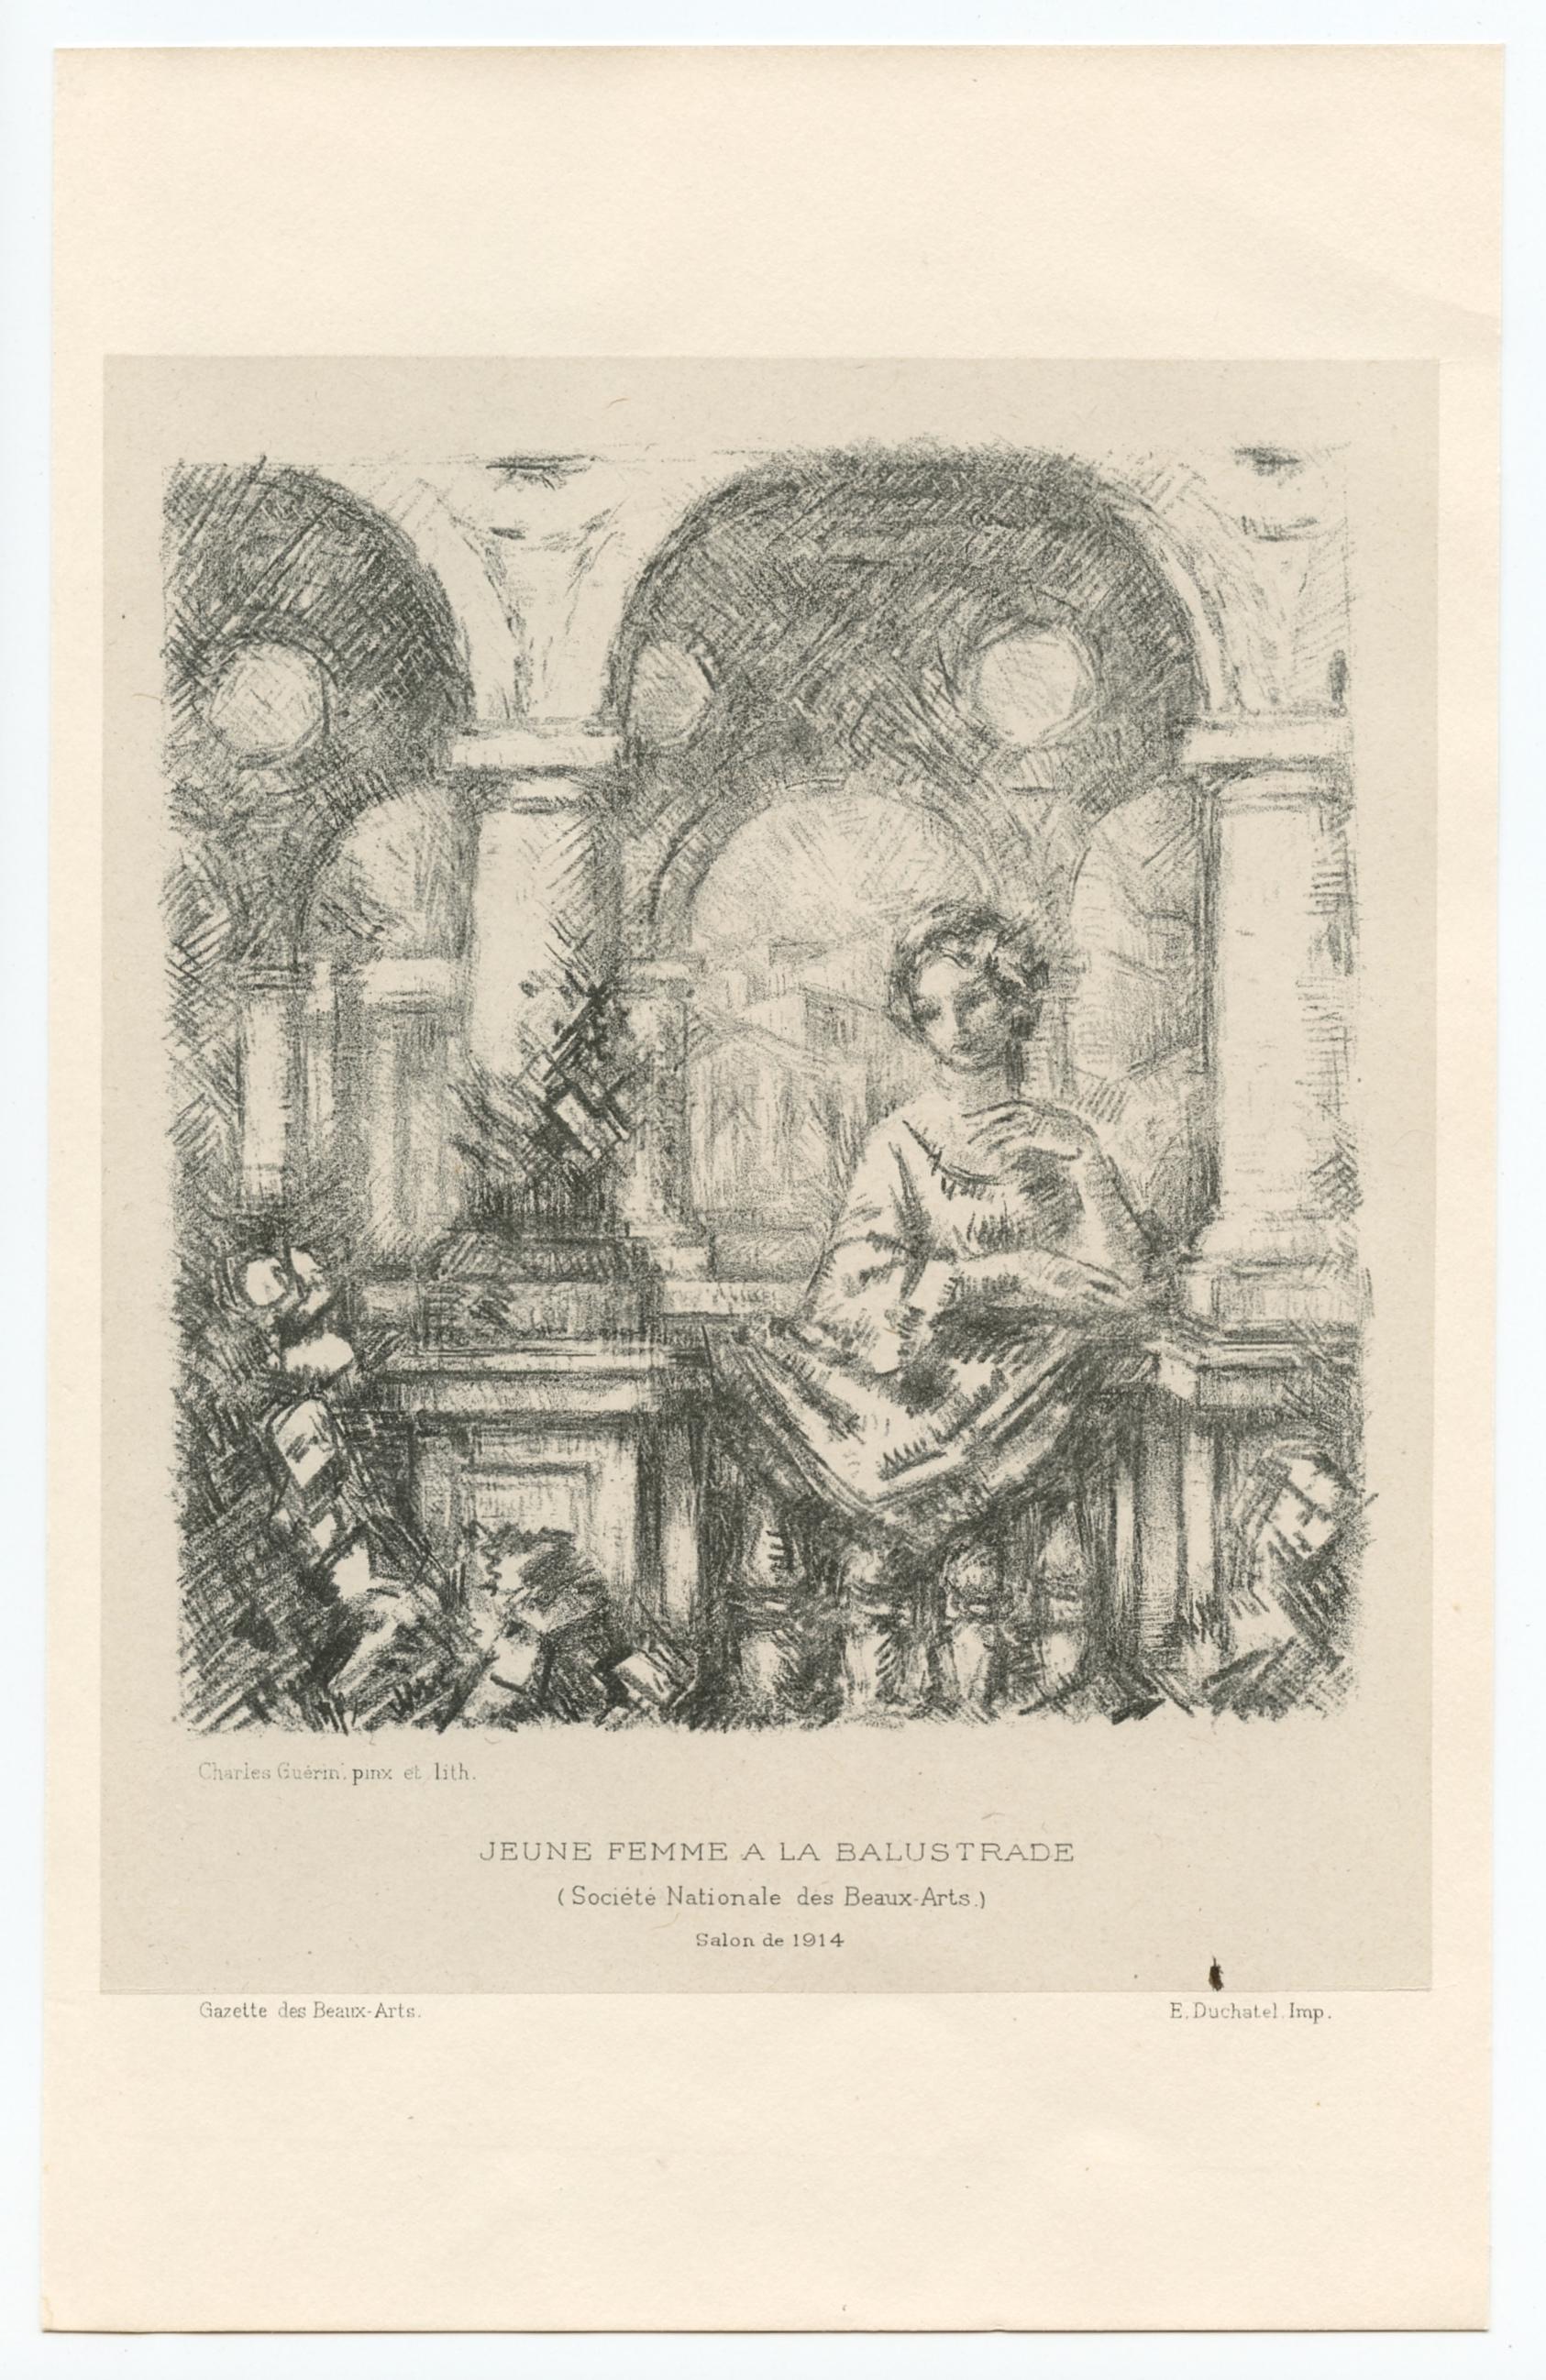 Charles Guérin Still-Life Print - "Jeune femme a la balustrade" original lithograph